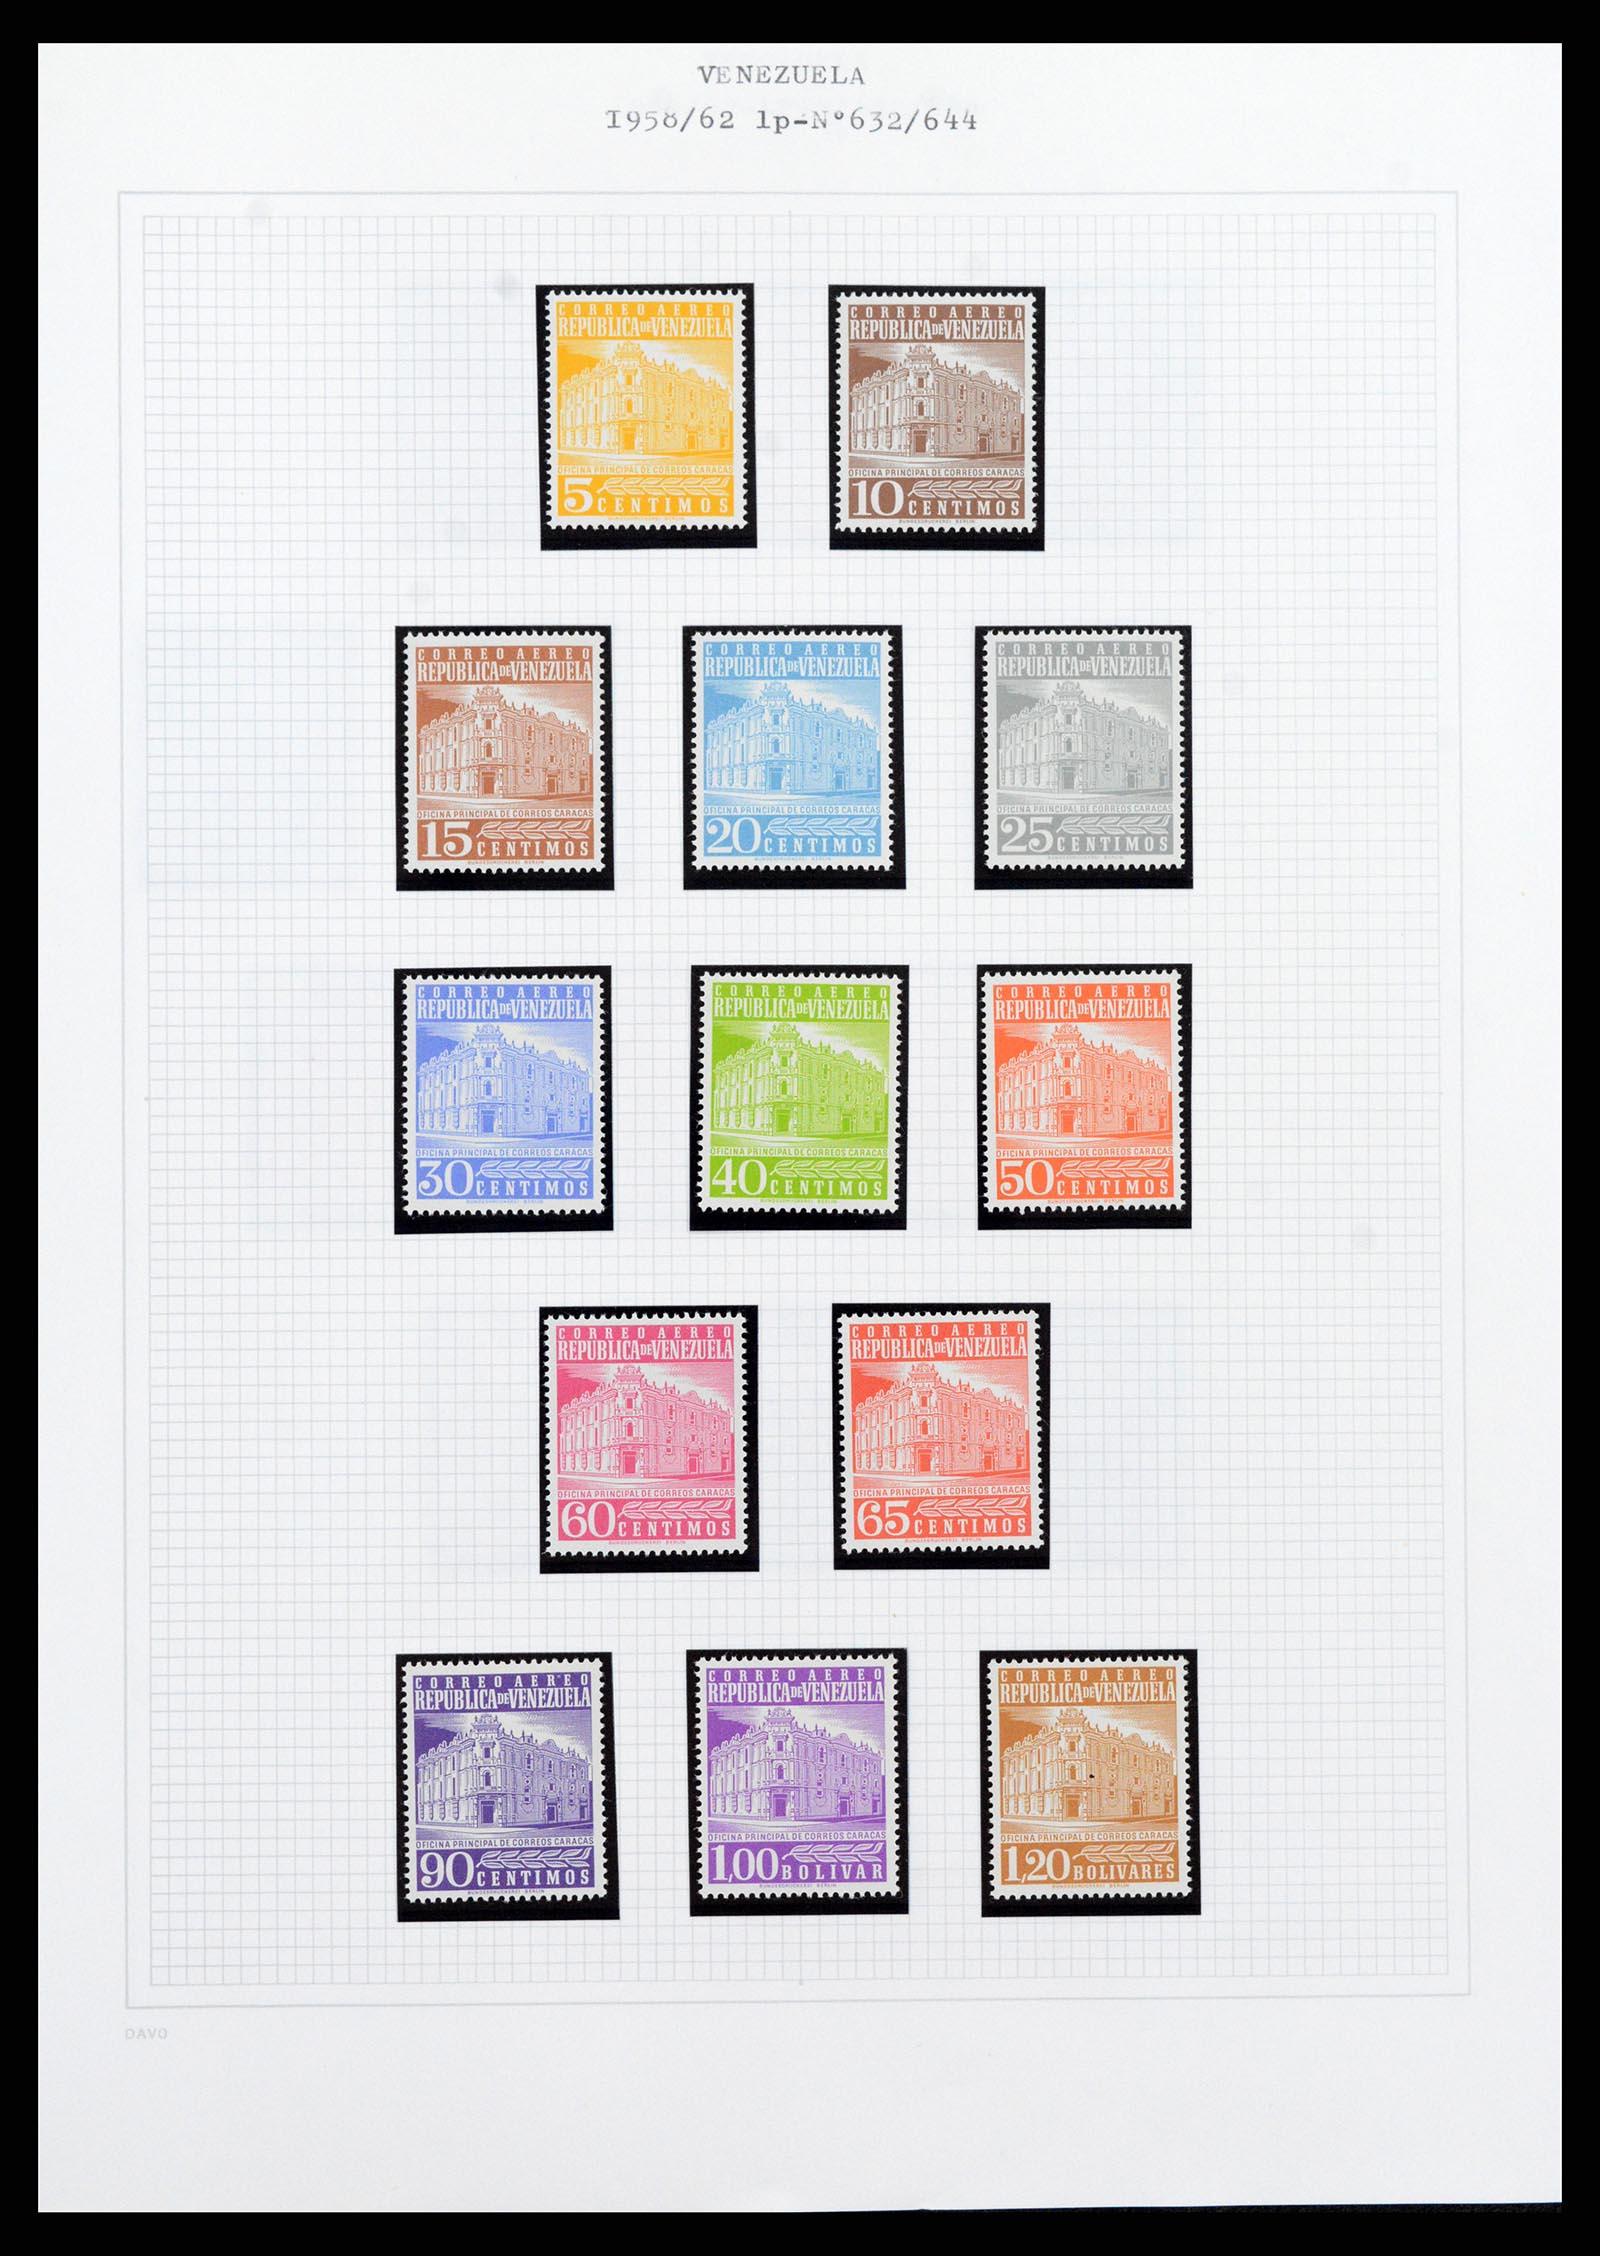 37353 093 - Stamp collection 37353 Venezuela 1880-1960.